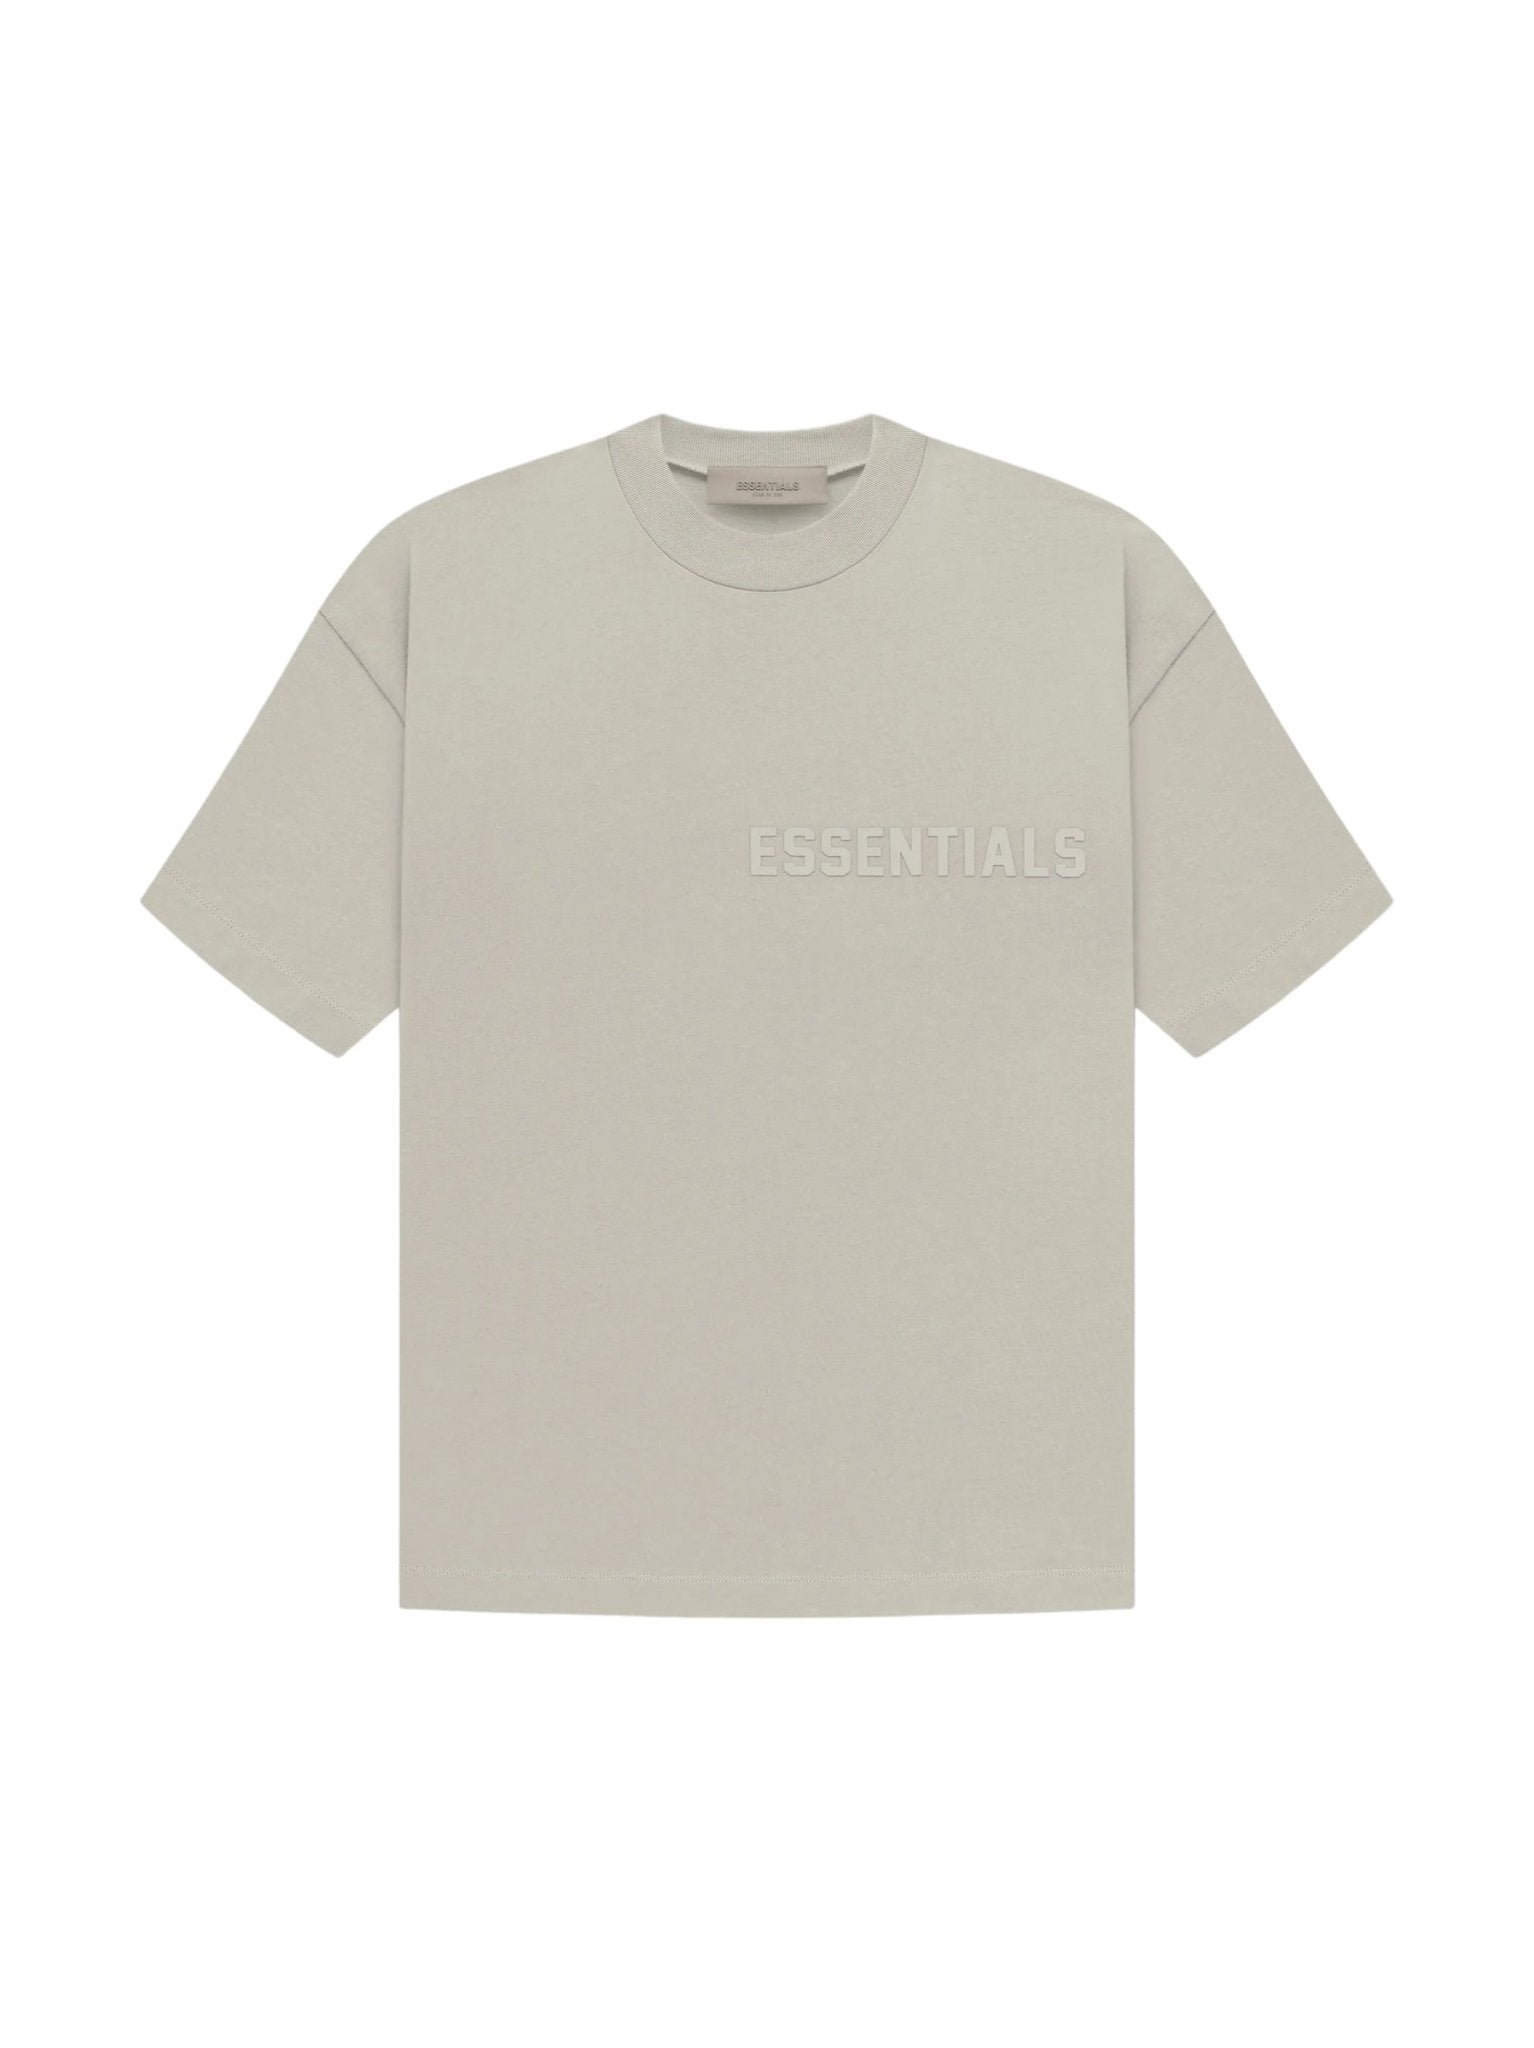 Fear of God Essentials T-shirt Seal - Supra Sneakers